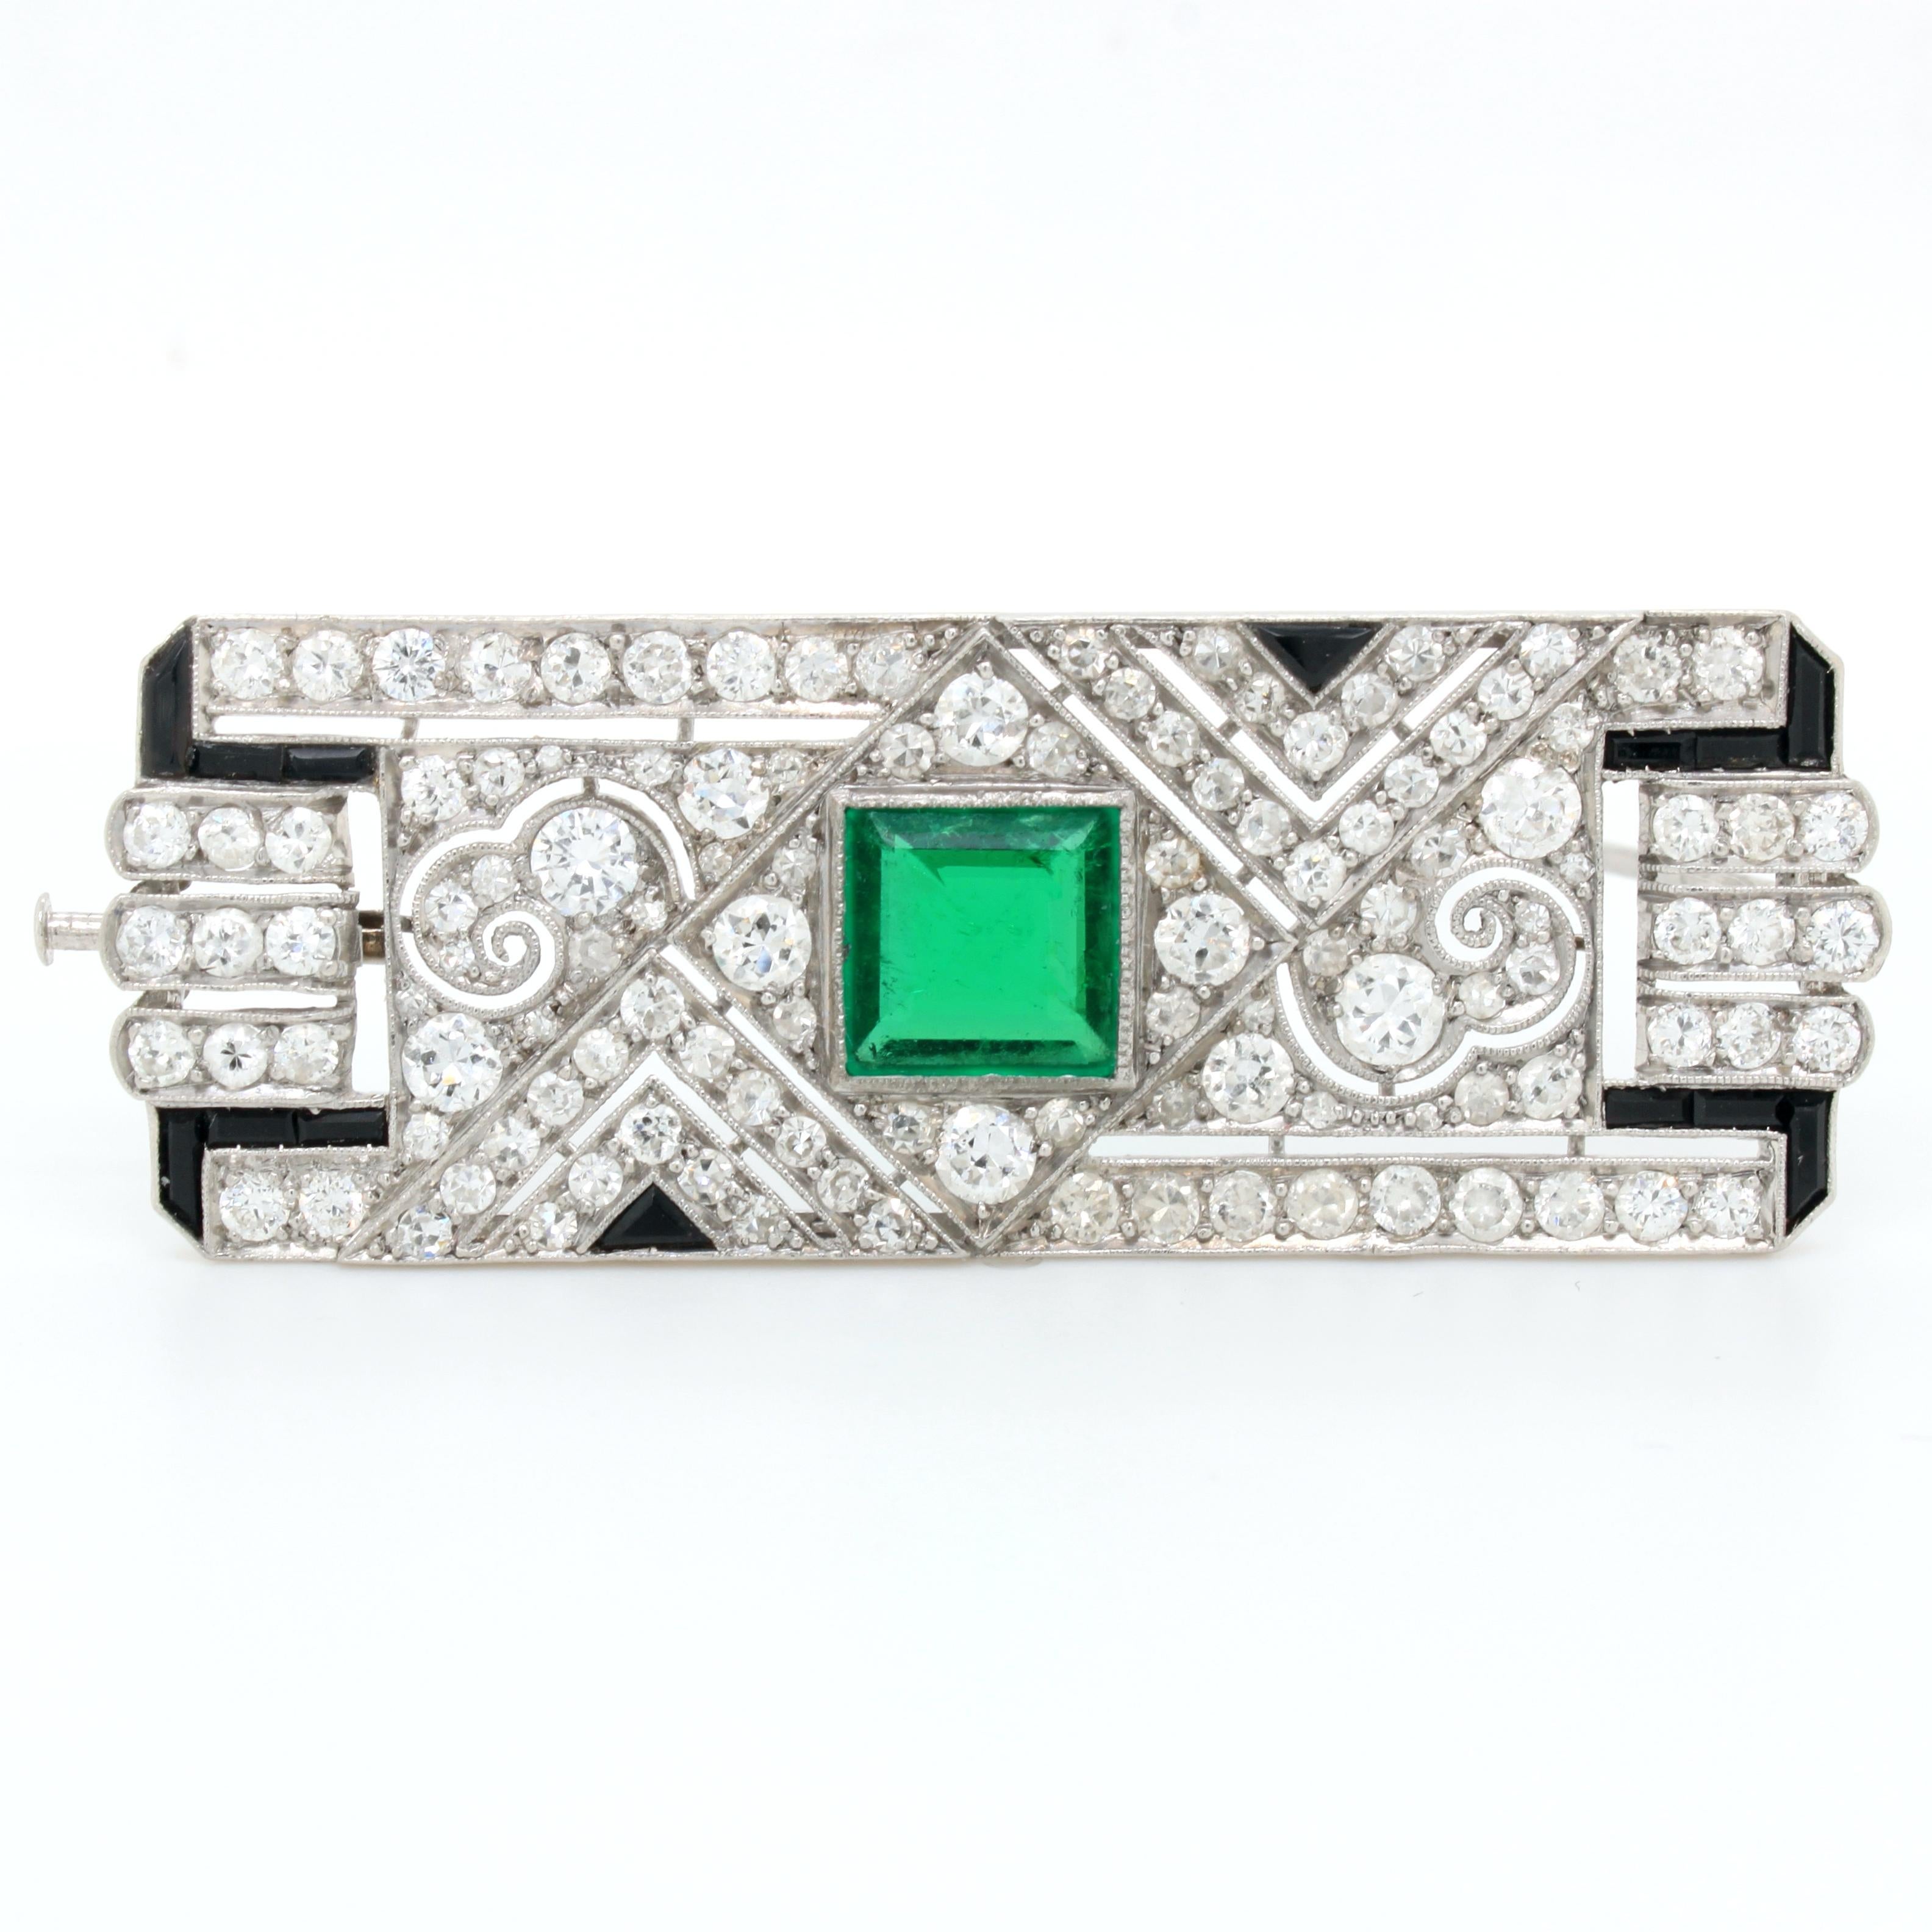 Square Cut Columbian Emerald, Diamond and Onyx Art Deco Brooch, ca. 1920s For Sale